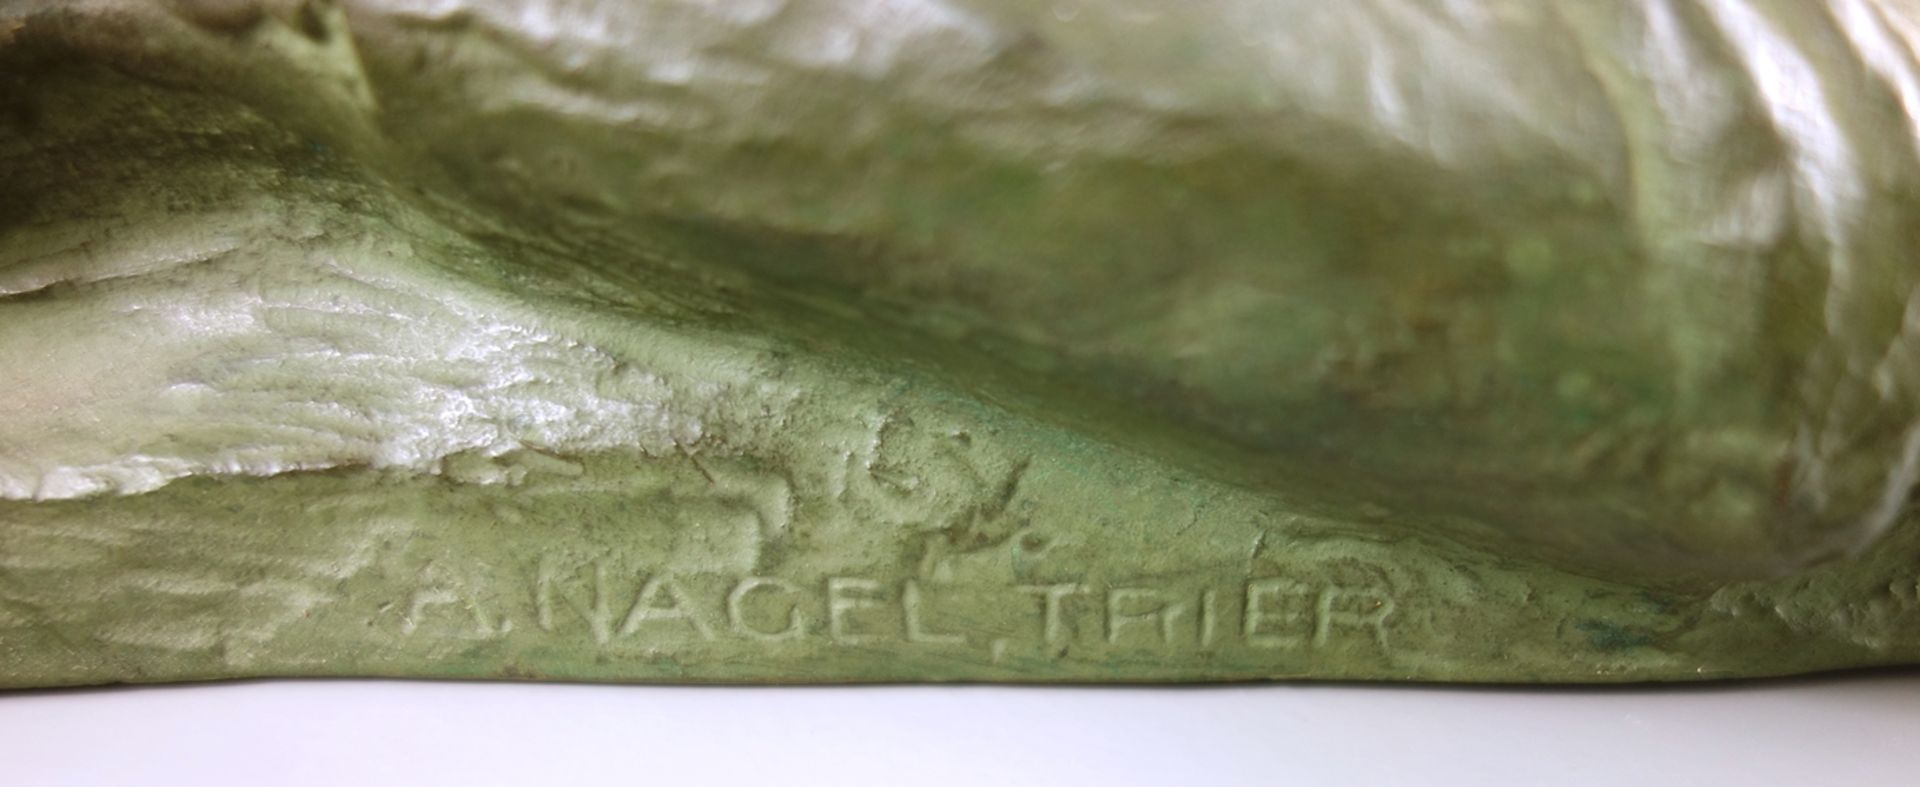 Anton Nagel / Trier, Kruzifix, Bronze, um 1930, signiert "A.NAGEL, TRIER", grün patiniert, Gew.4, - Image 3 of 4